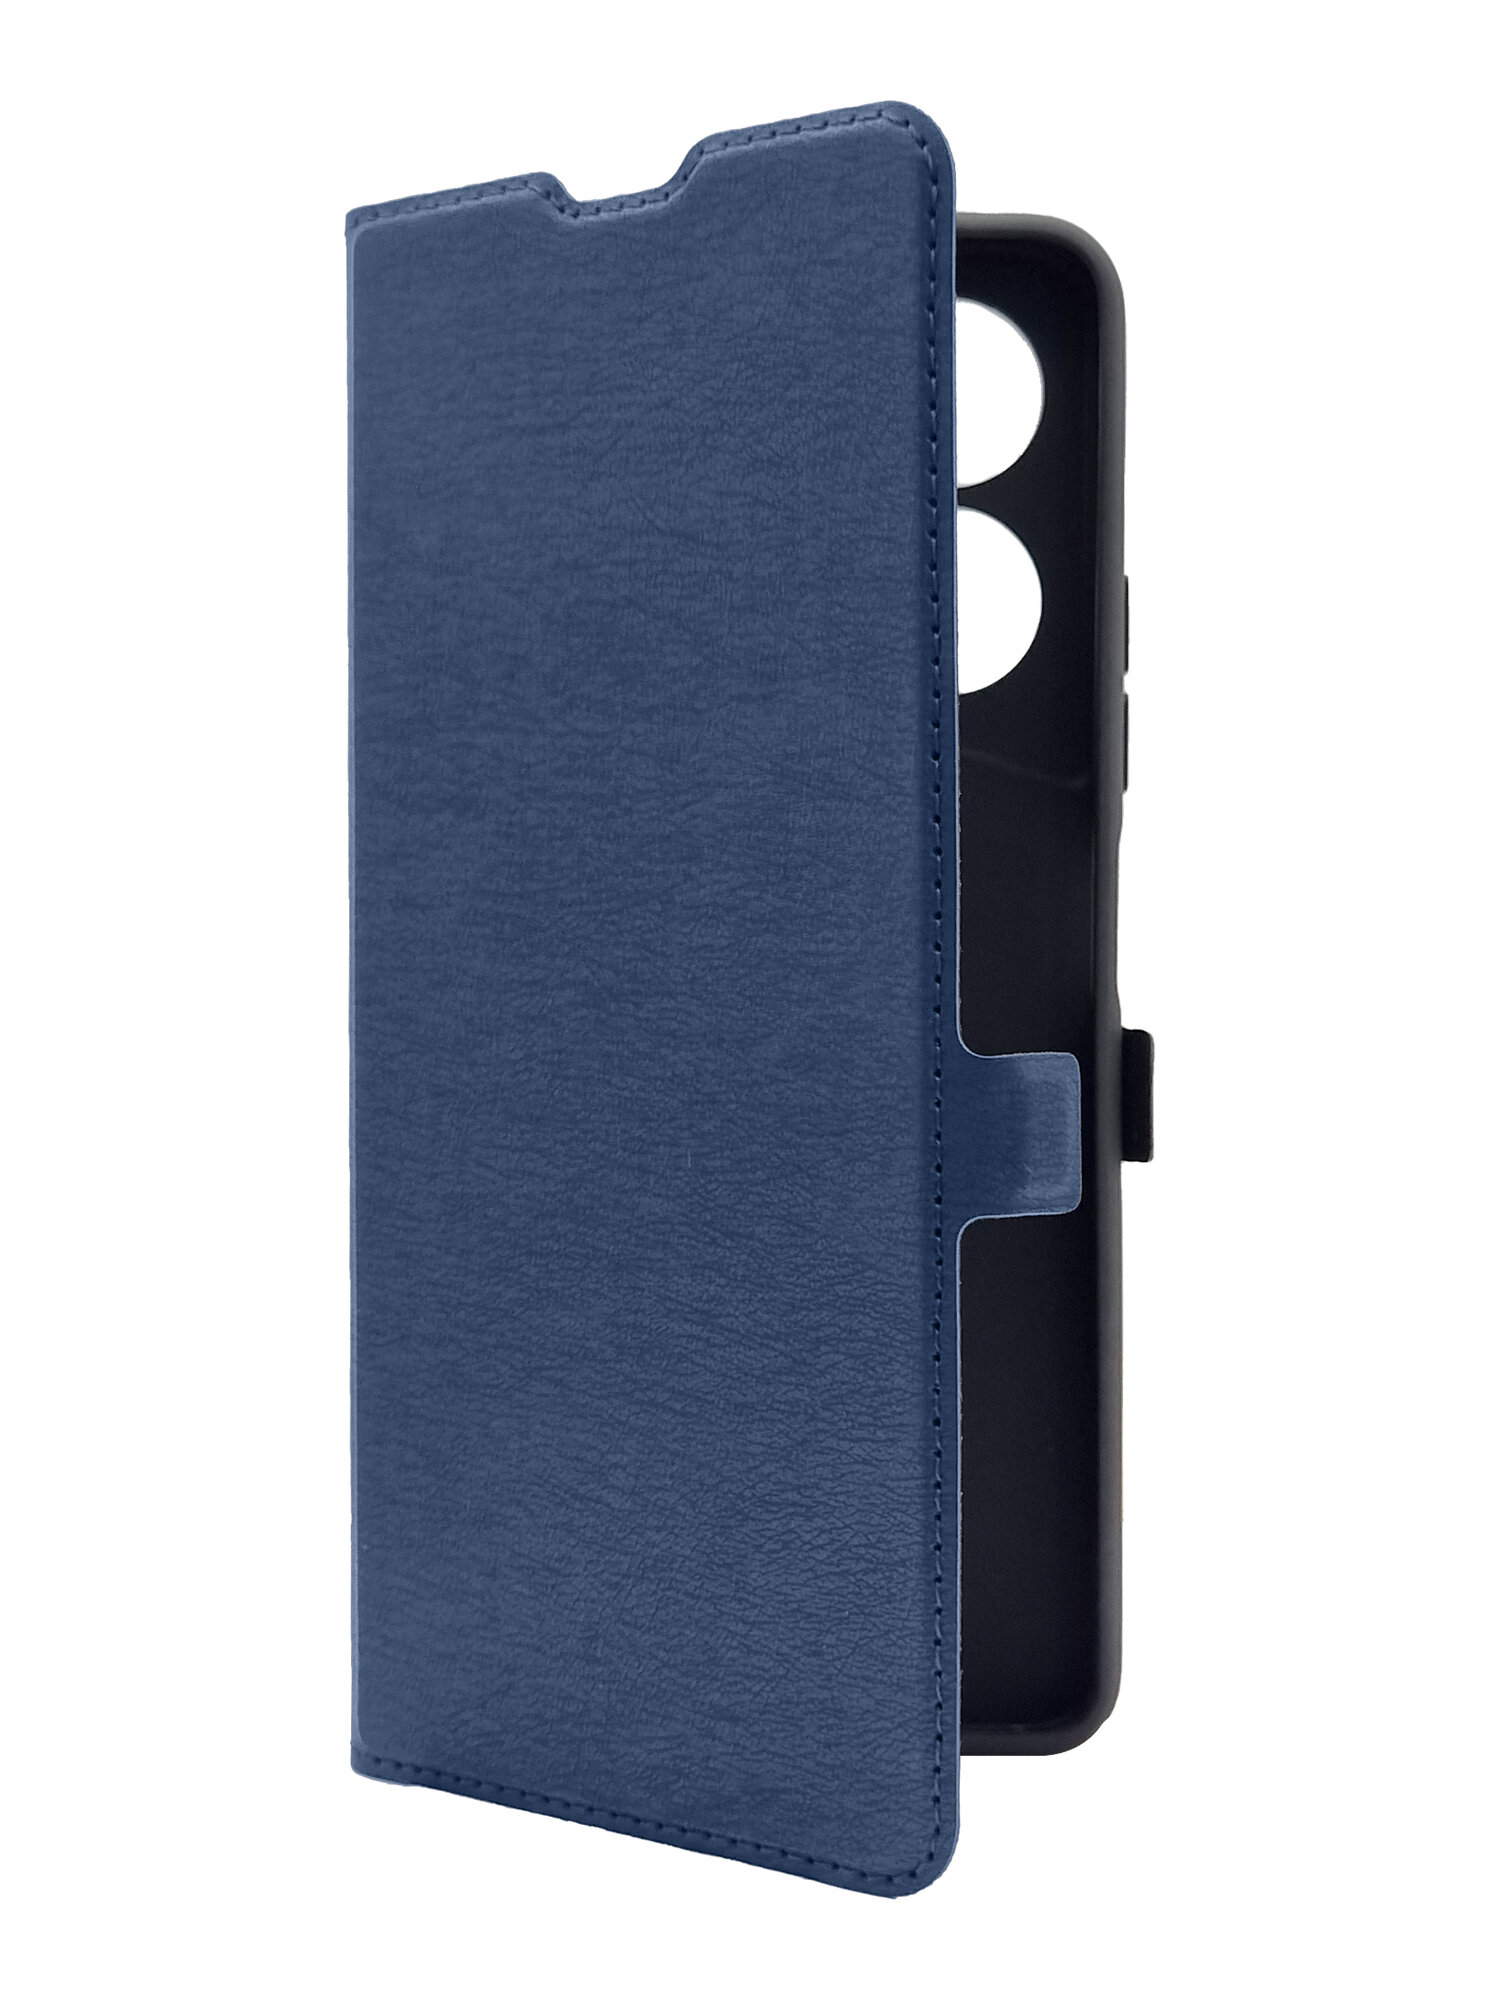 Чехол на Tecno Pova Neo 3 (Техно Пова Нео 3) синий книжка эко-кожа с функцией подставки отделением для пластиковых карт и магнитами Book case, Brozo